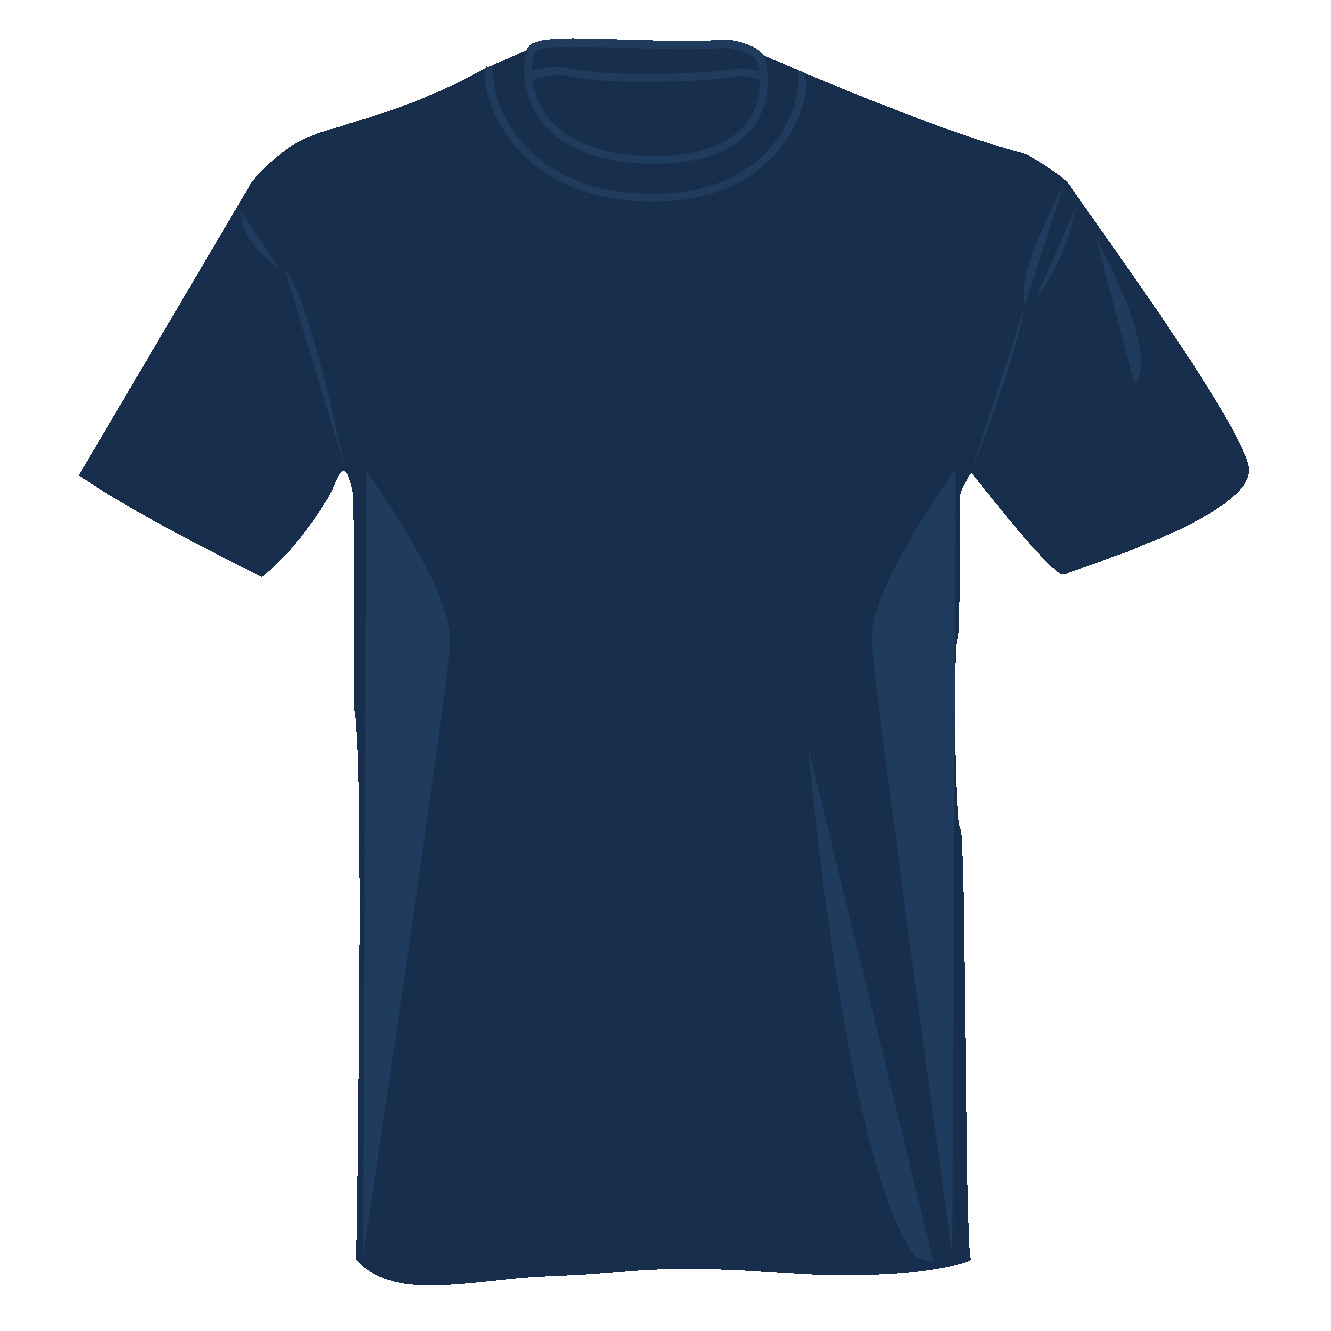 Tee Shirt Clipart at GetDrawings | Free download